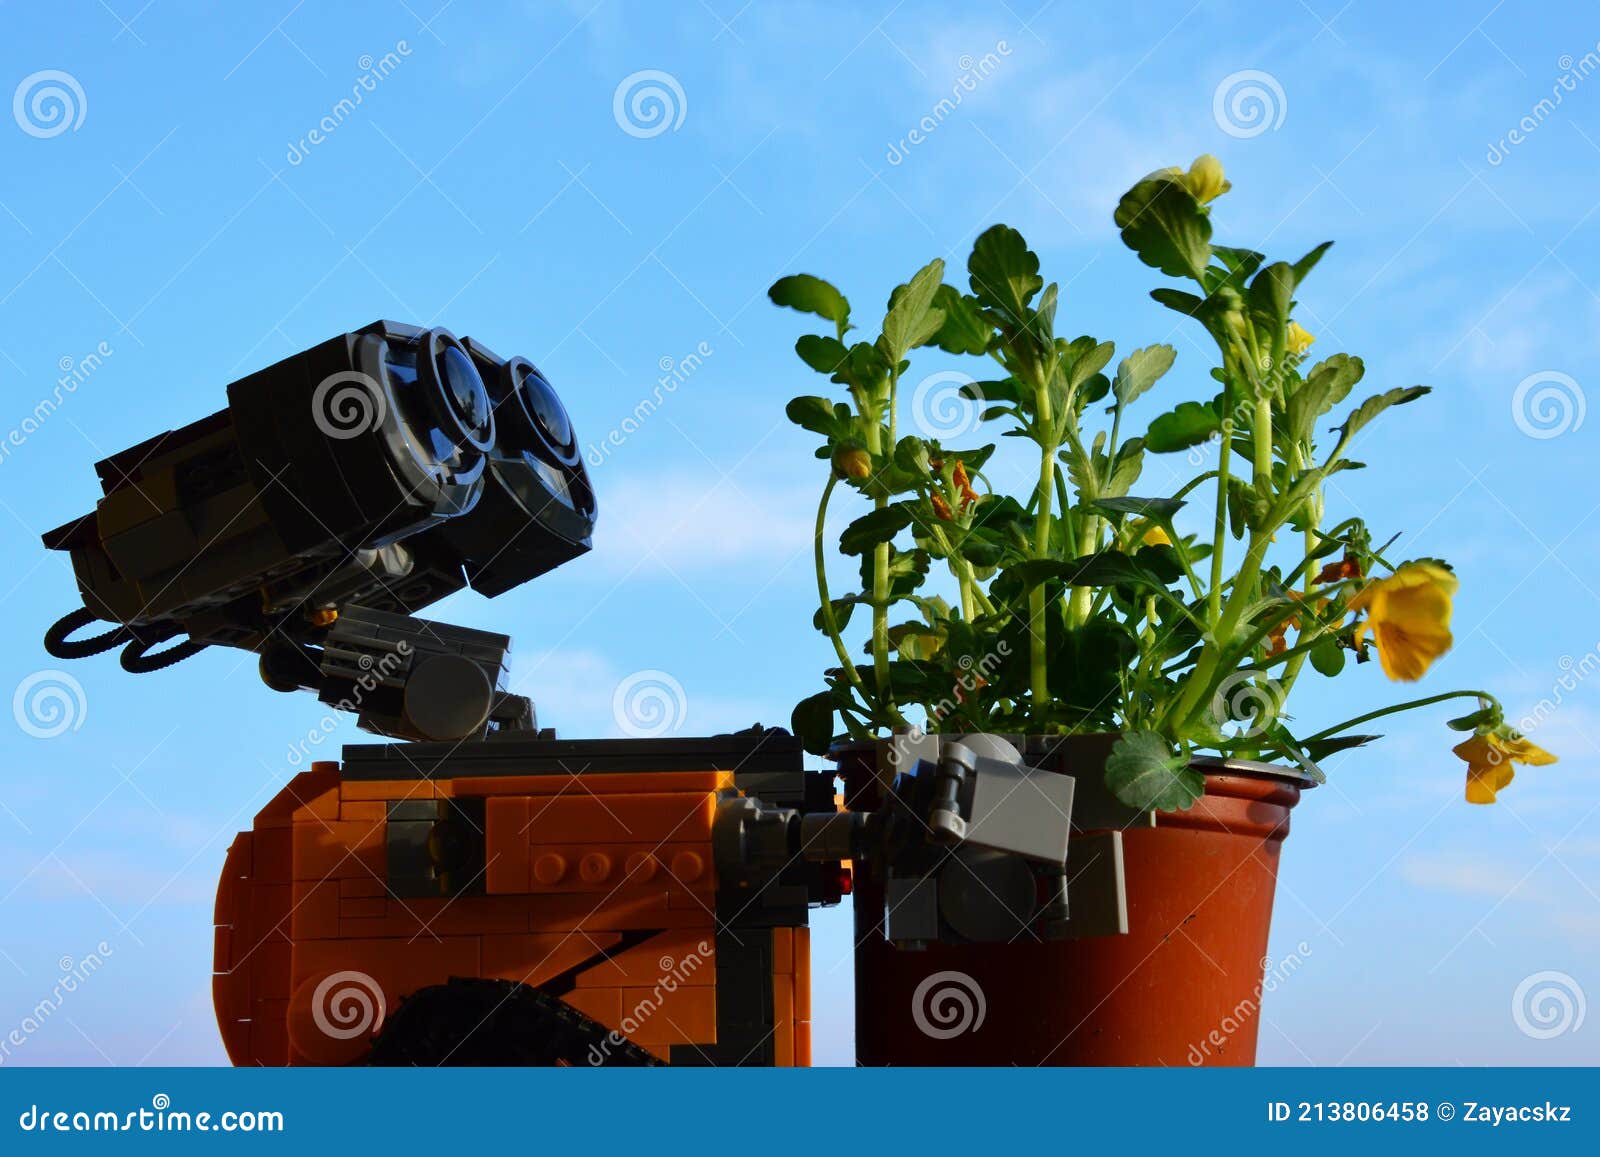 LEGO Wall-E Robot from Pixar Animated Movie Adoring Yellow Flowering Pansy  Plant, Latin Name Viola, Blue Spring Skies Editorial Stock Photo - Image of  skies, garden: 213806458